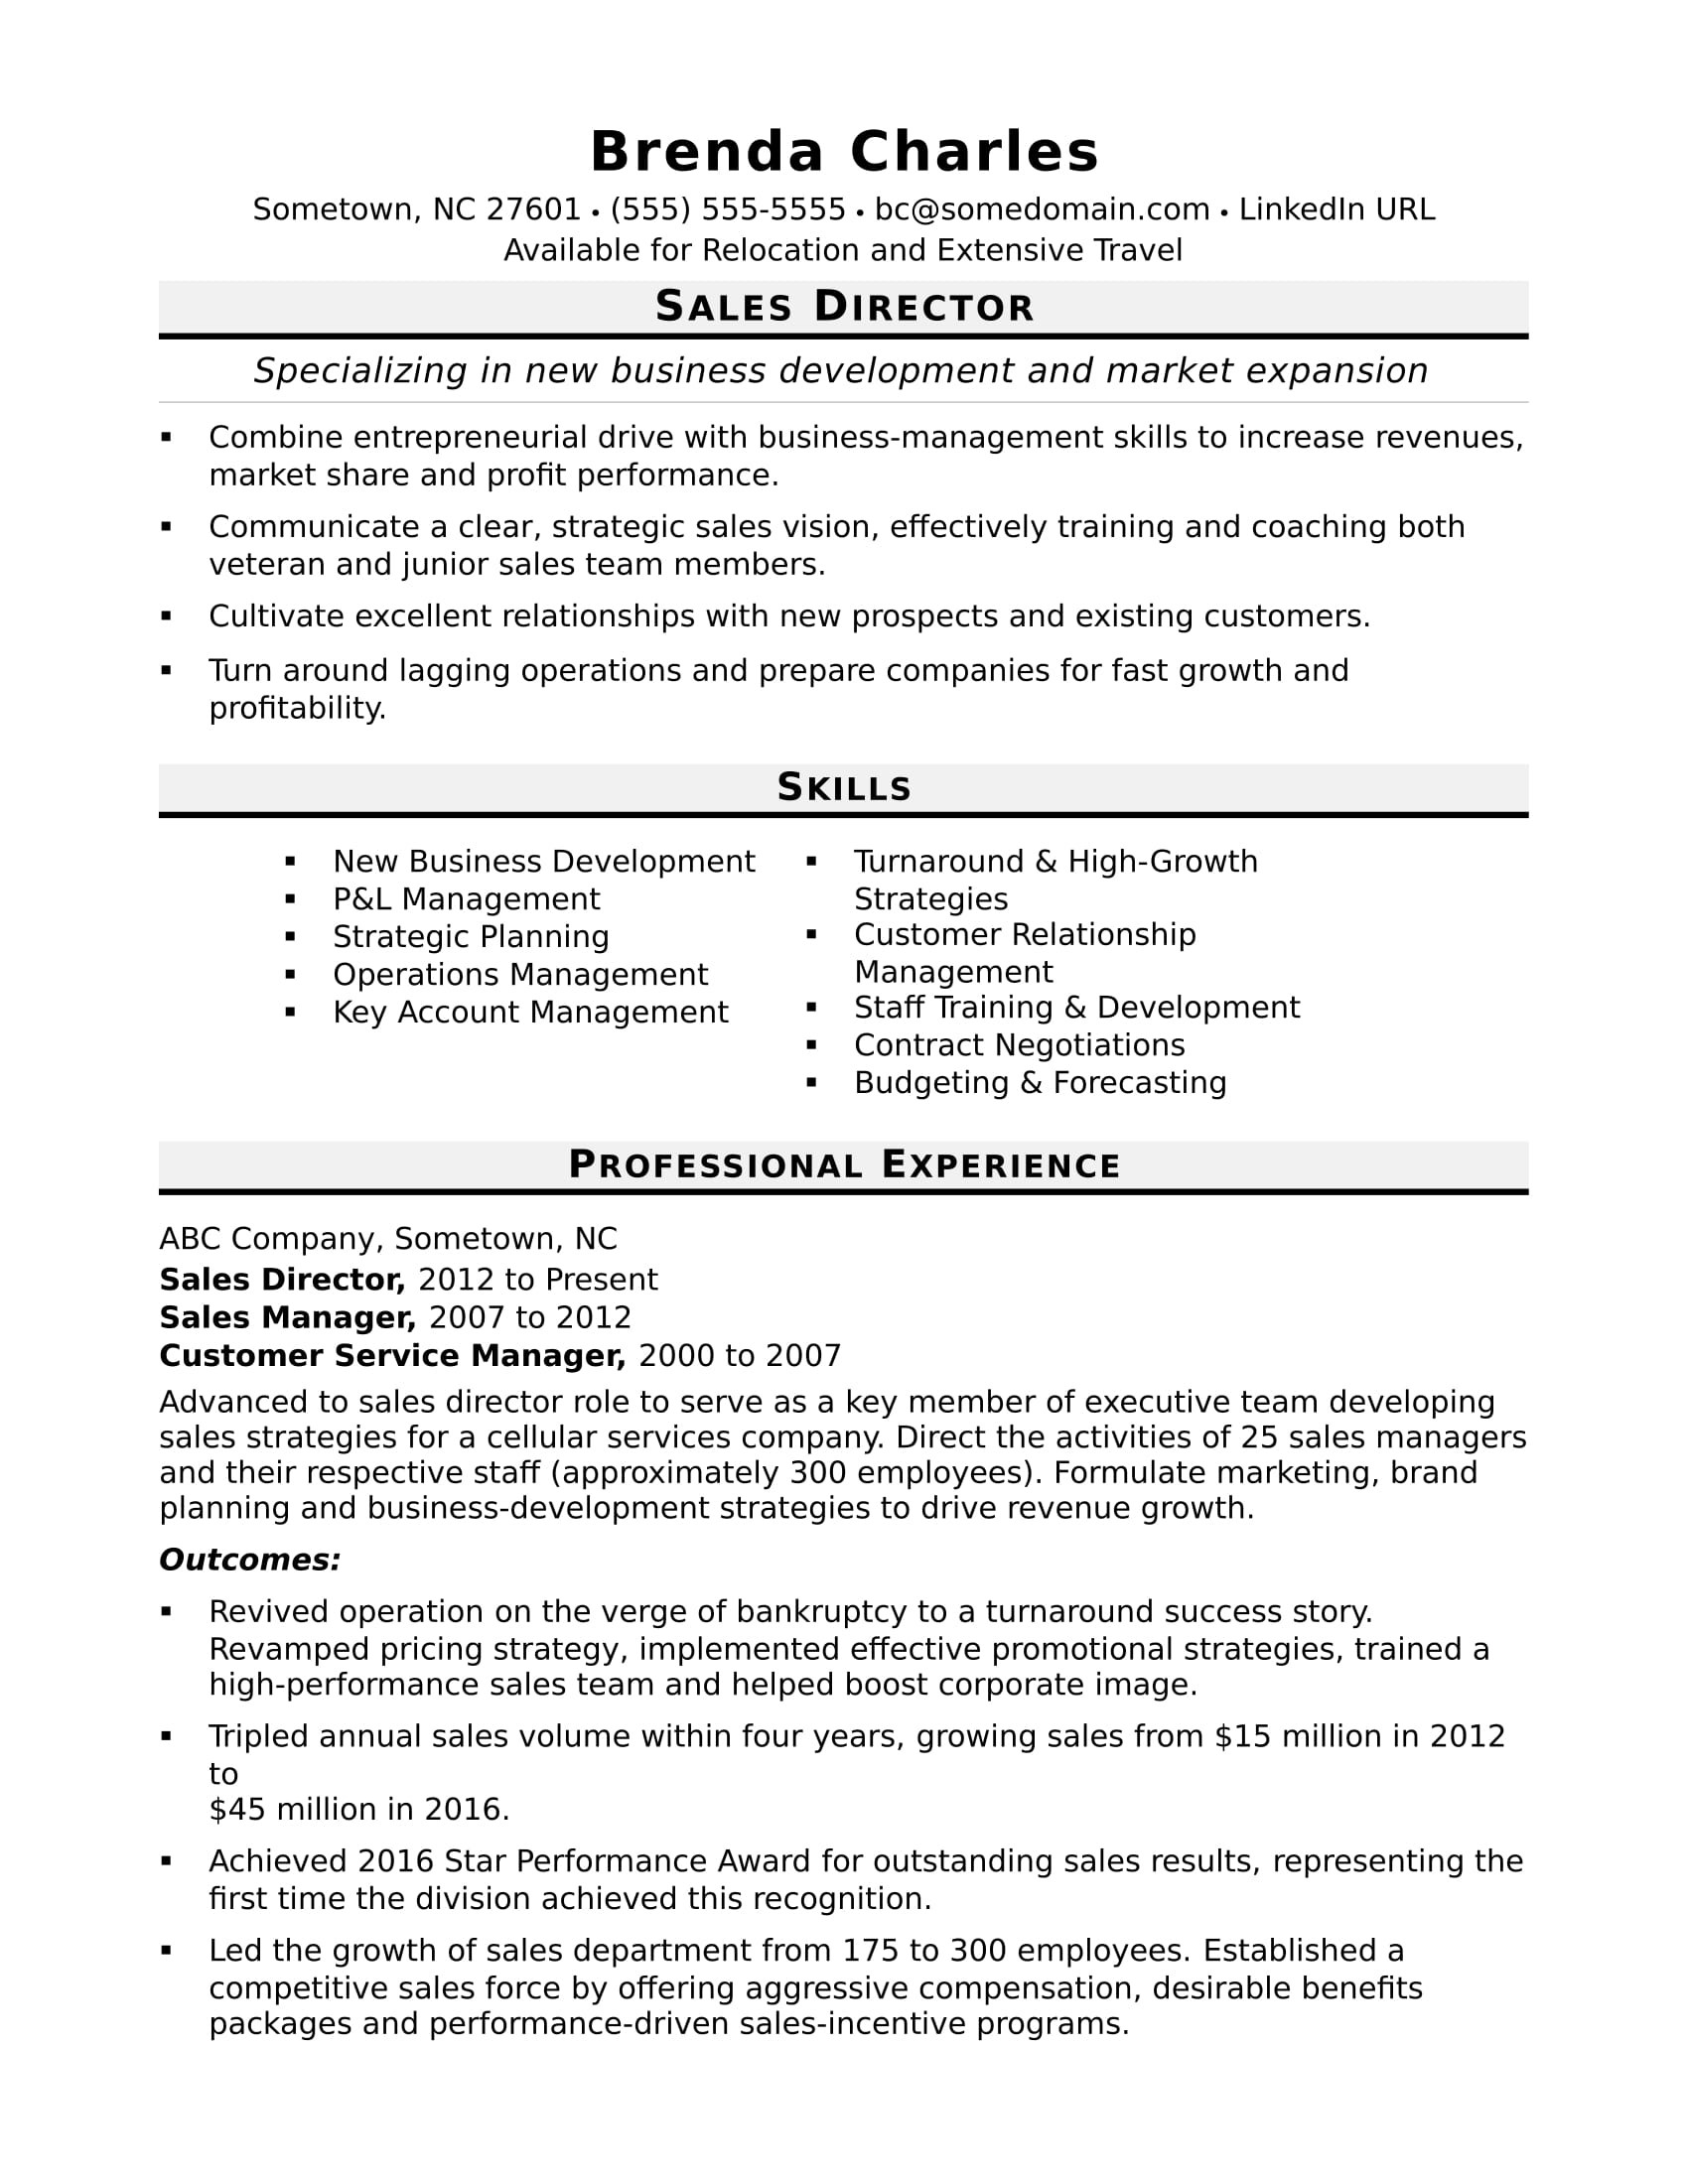 Sample Of Professional Skills In Resume Sales Director Resume Sample Monster.com